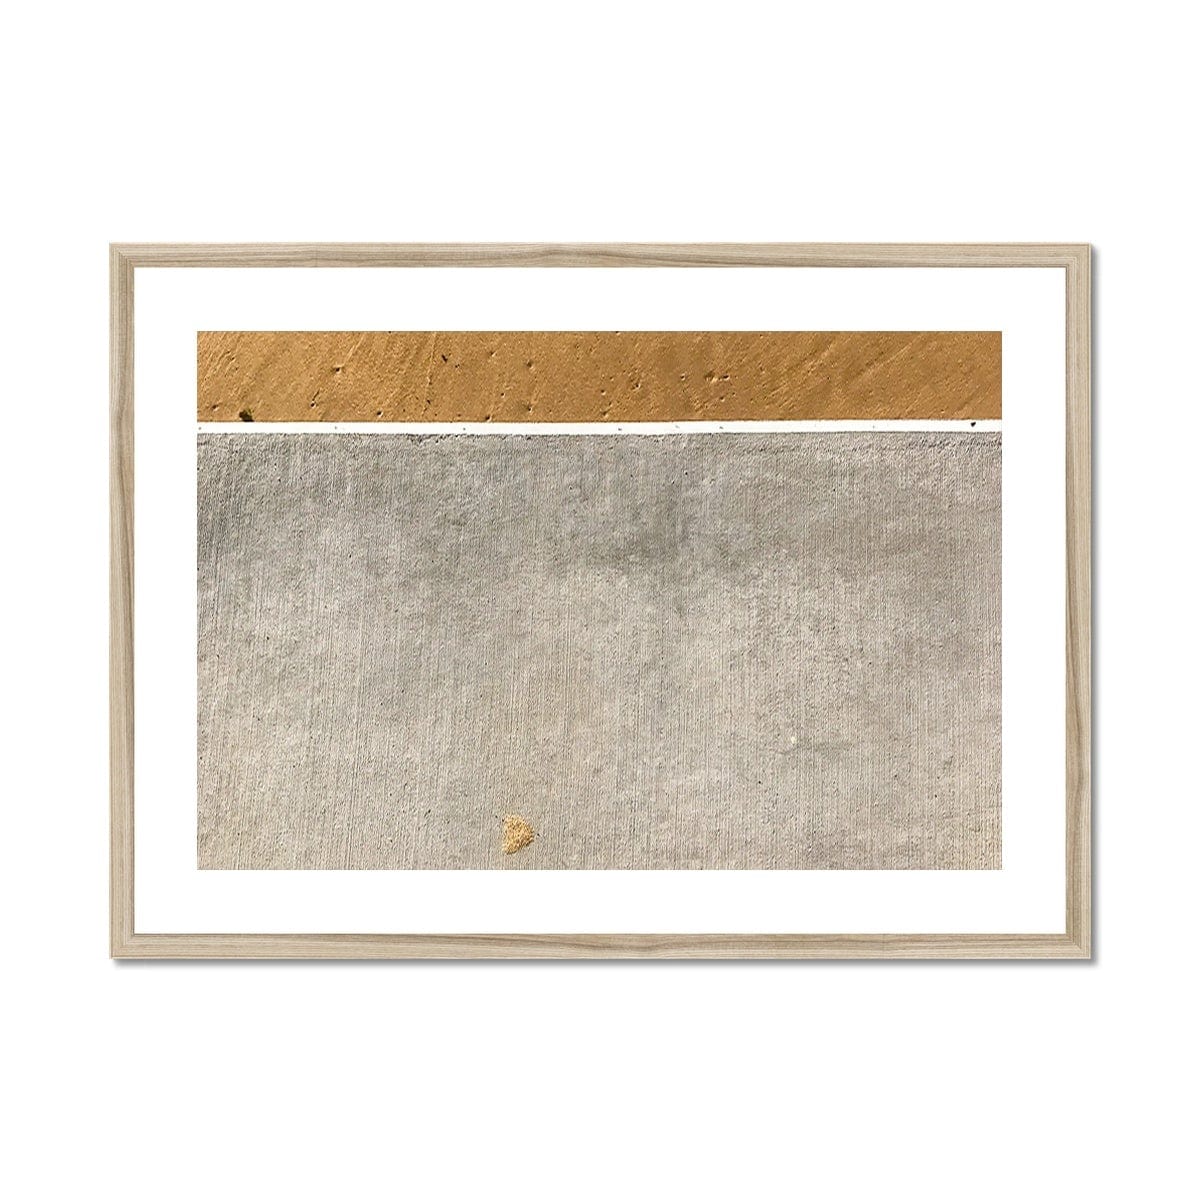 Adam Davies Framed A4 Landscape (29x21cm) / Natural Frame Natures Abstract Sand Lines Framed & Mounted Print